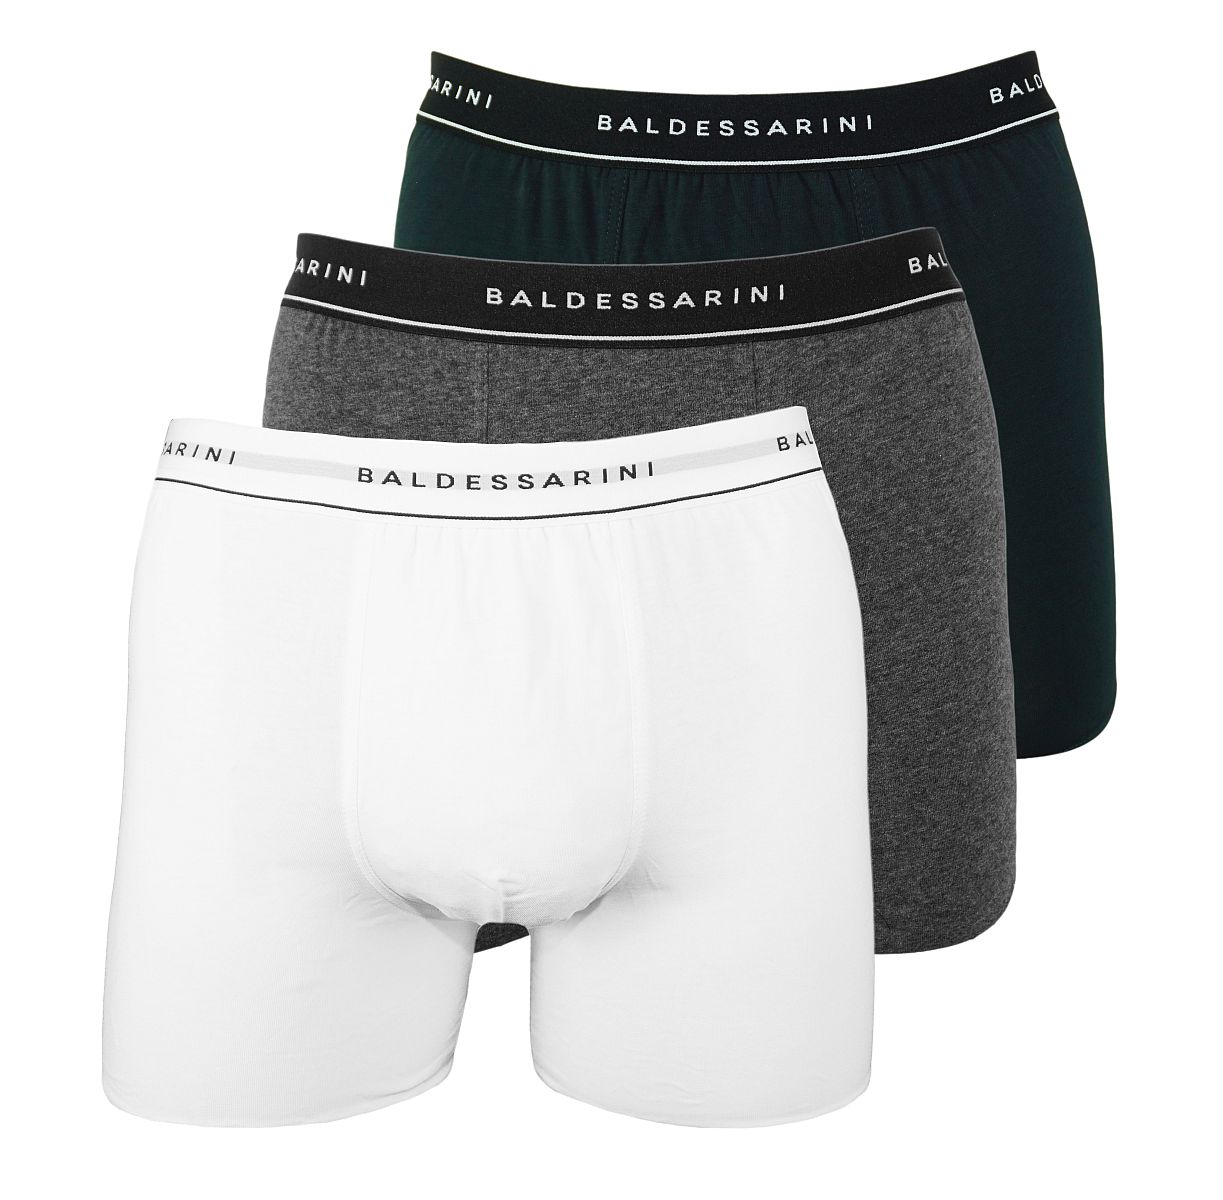 Baldessarini 3er Pack Shorts Boxershorts 90001 6061 95018 black wh W18-BSS1